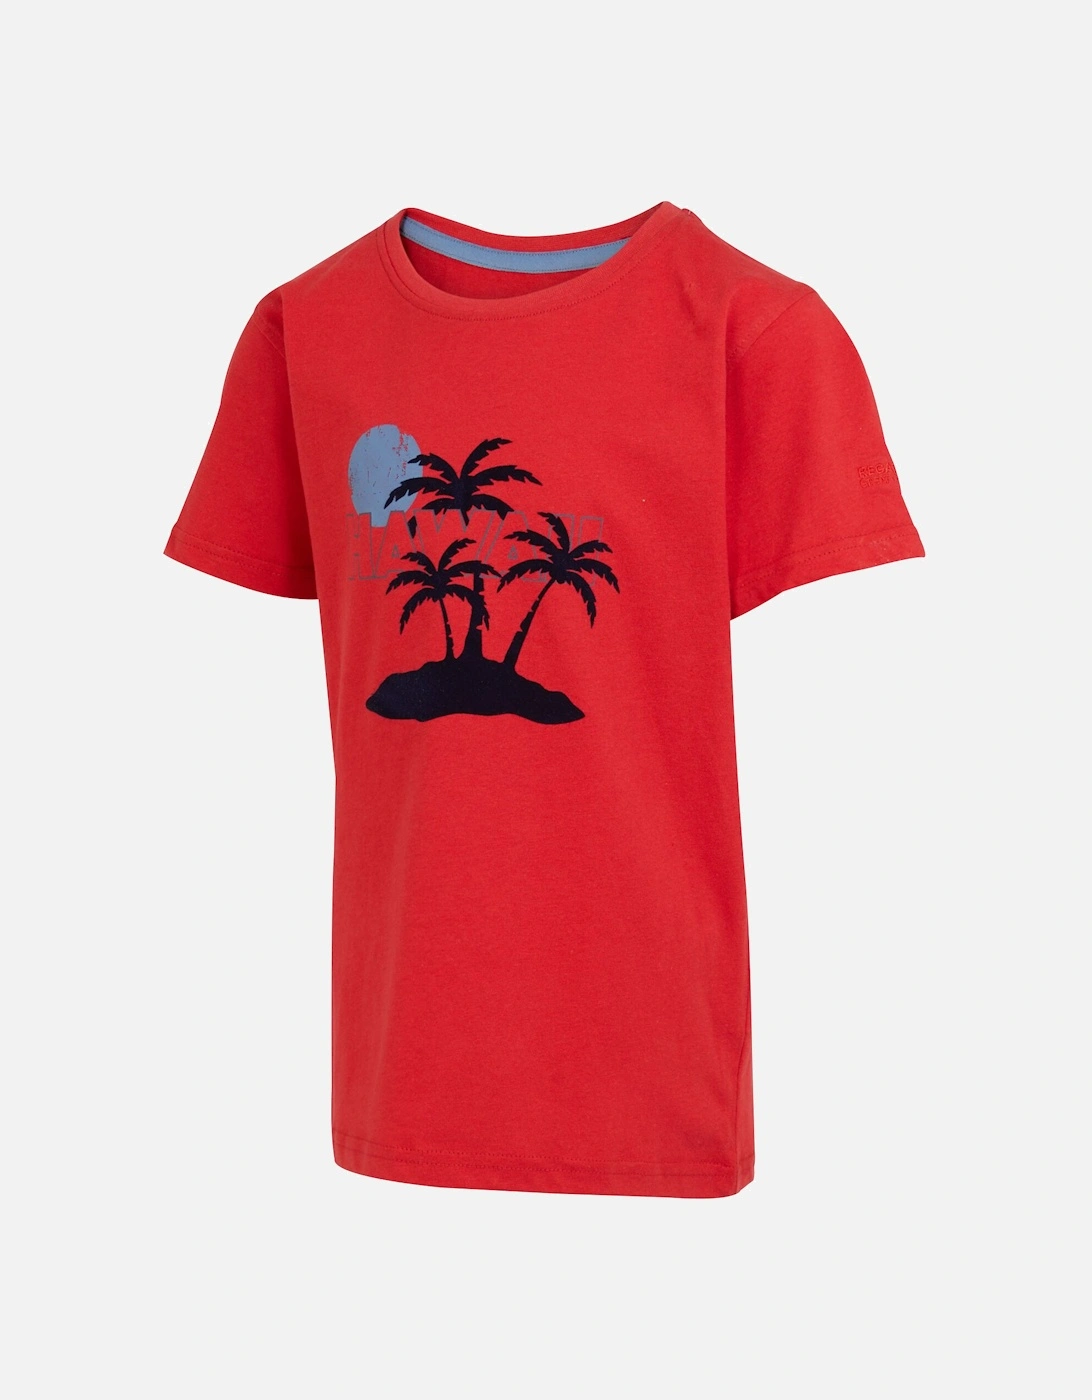 Childrens/Kids Hawaii T-Shirt